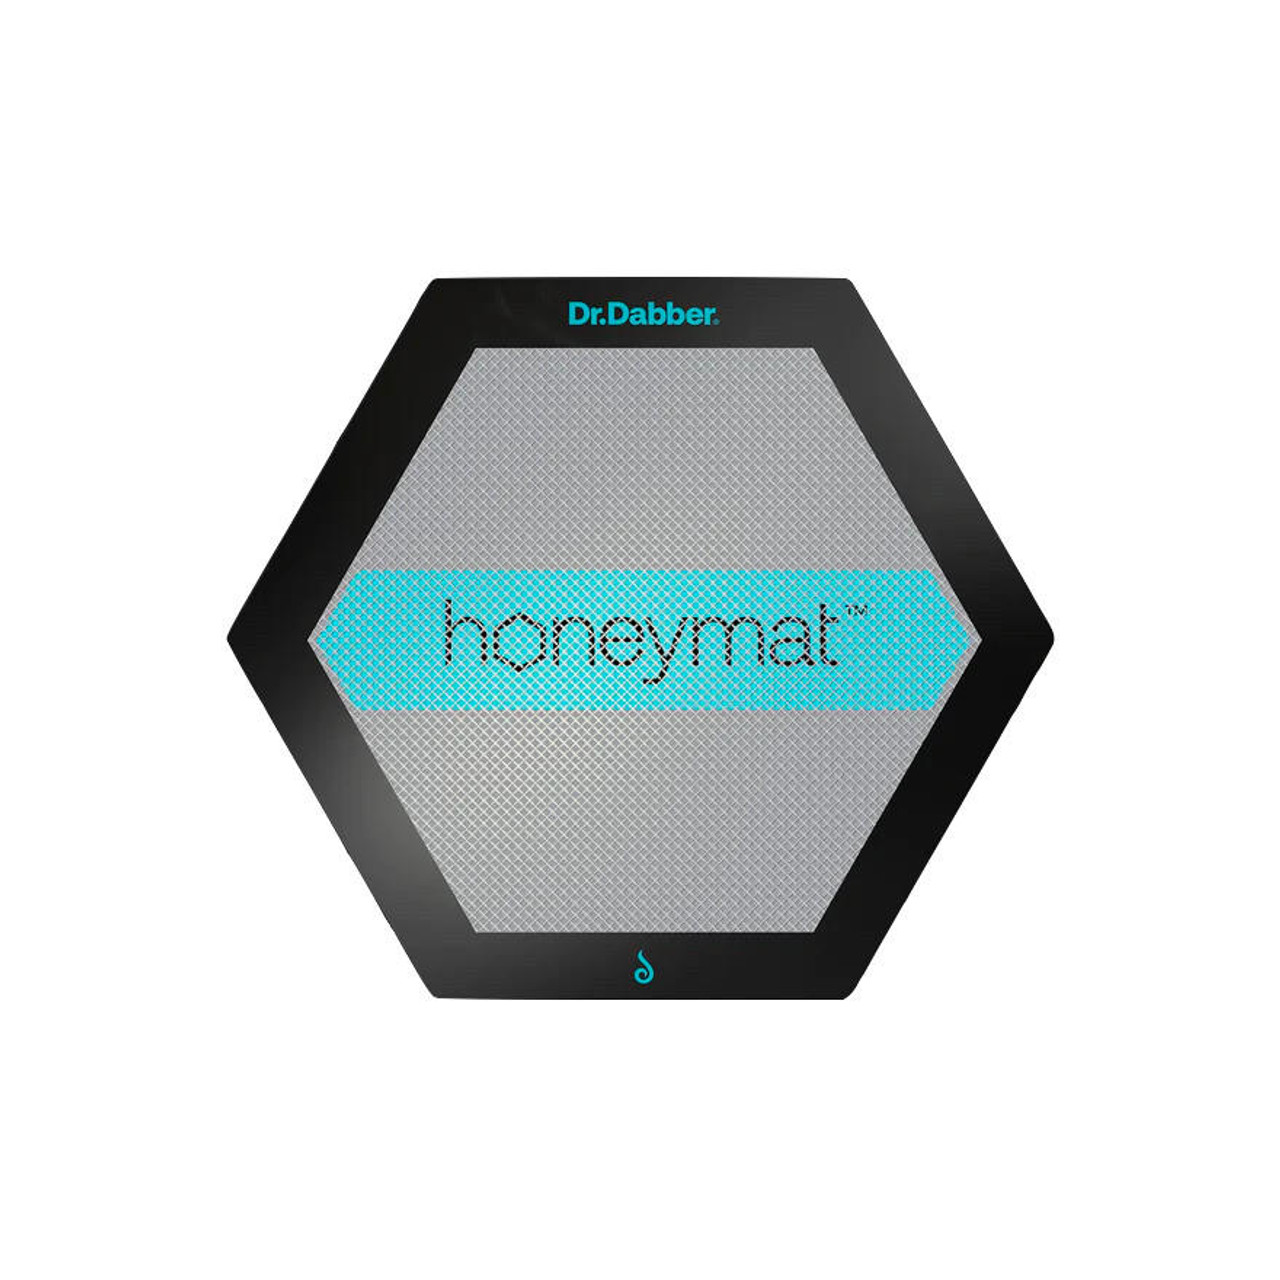 Dr Dabber Honeymat Large Silicone Mat: 11 x 12.5 Dab Mat